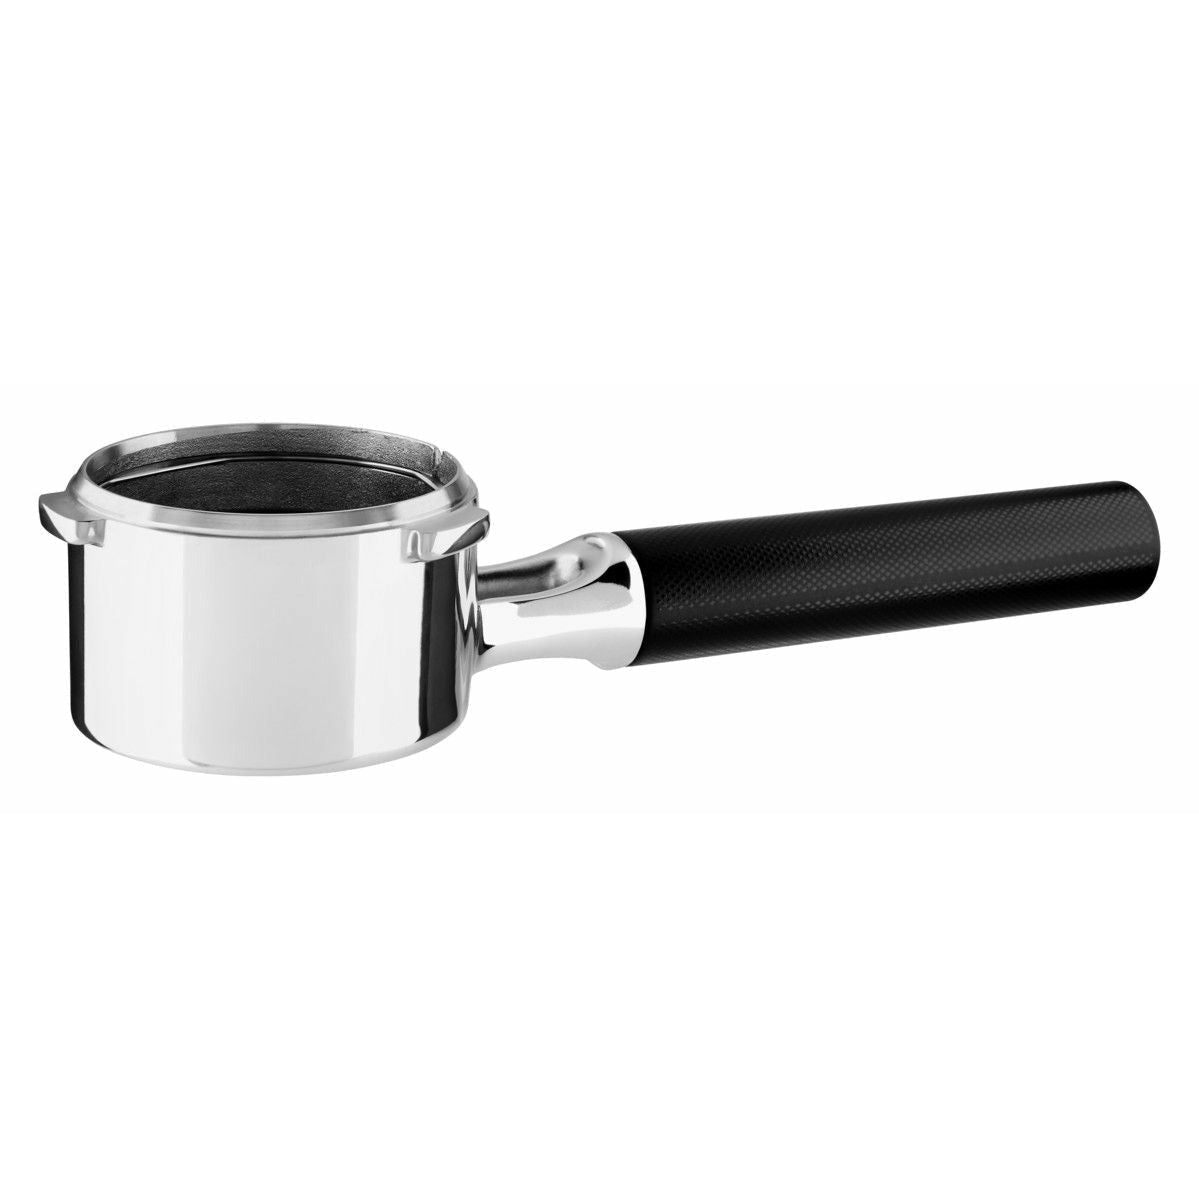 KitchenAid 5KES6503 Artisan Espressomaskine, Cast iron black